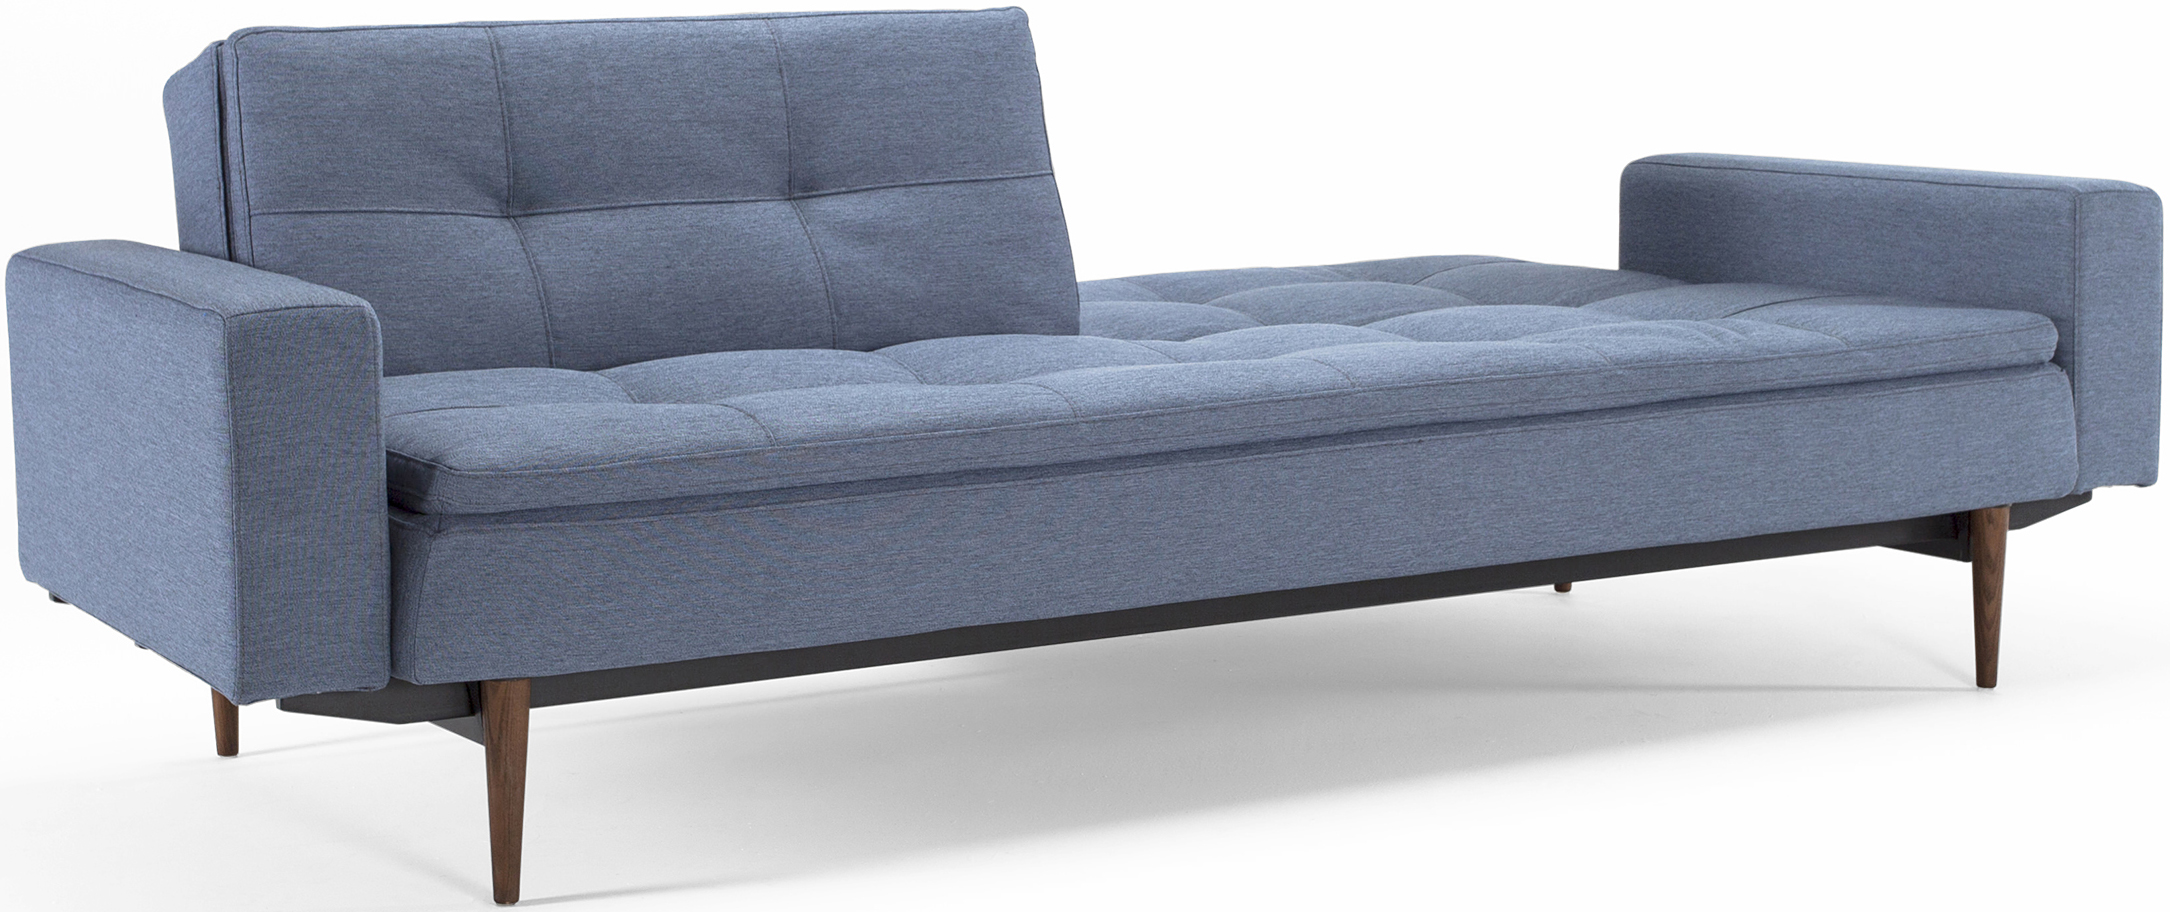 innovation dublexo sofa